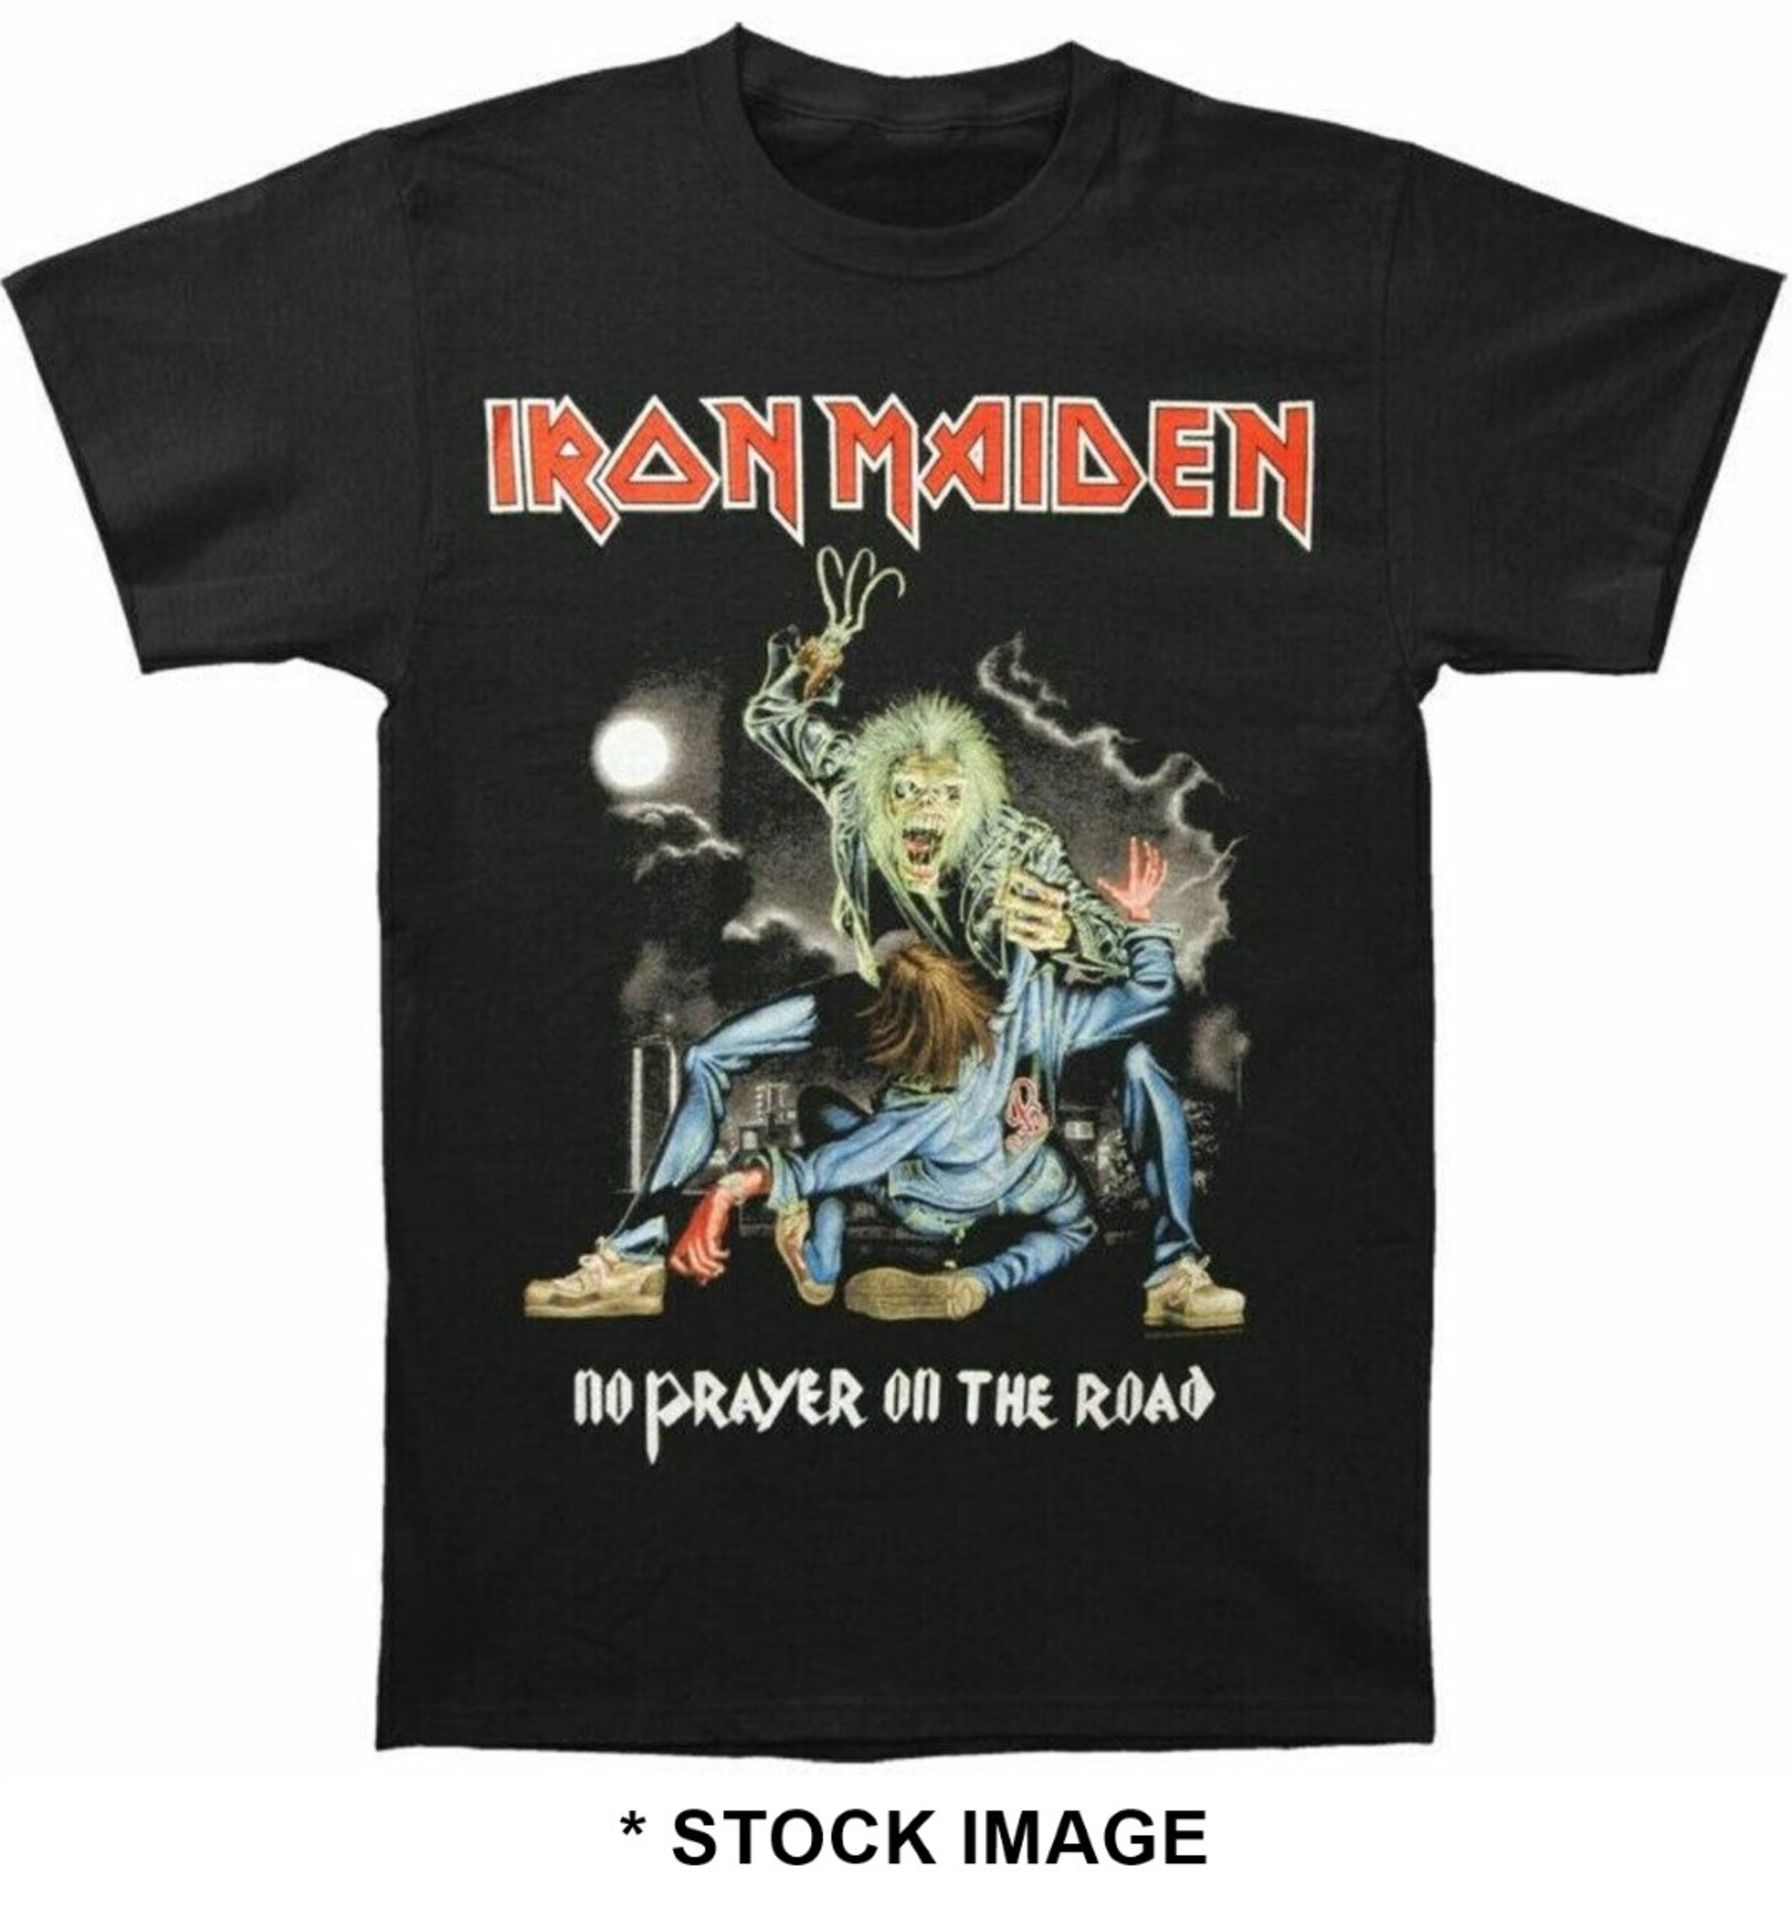 1 x IRON MAIDEN No Prayer on the Road Short Sleeve Men's T-Shirt by Gildan - Size: Medium - Colour: